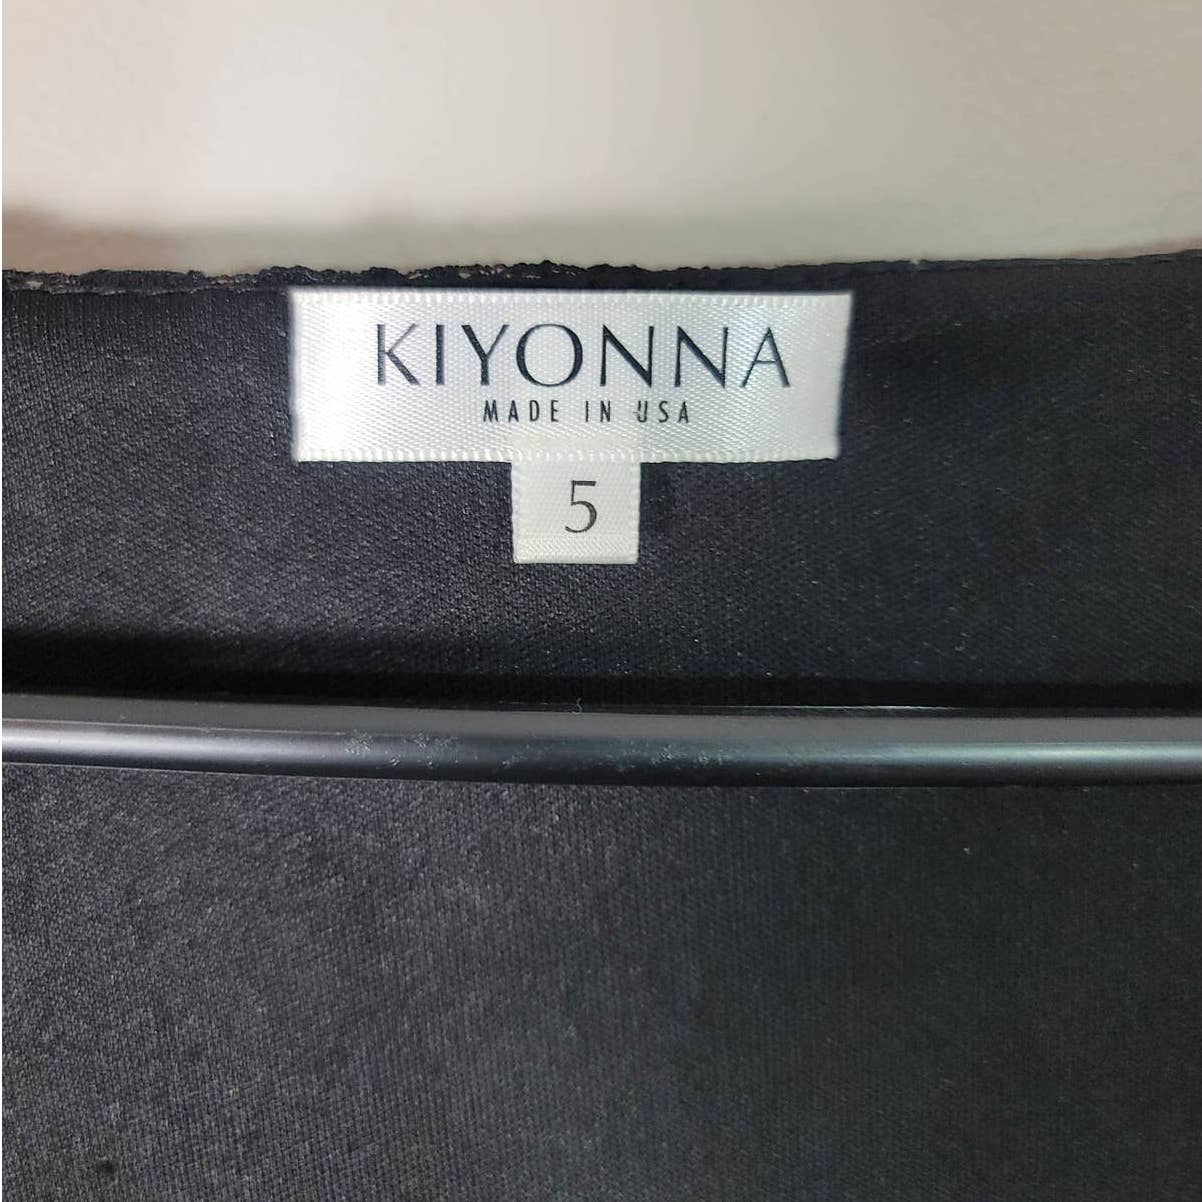 Kiyonna Bodycon Dress Green Velvet Black Lace 3/4 Sleeves Size 5X